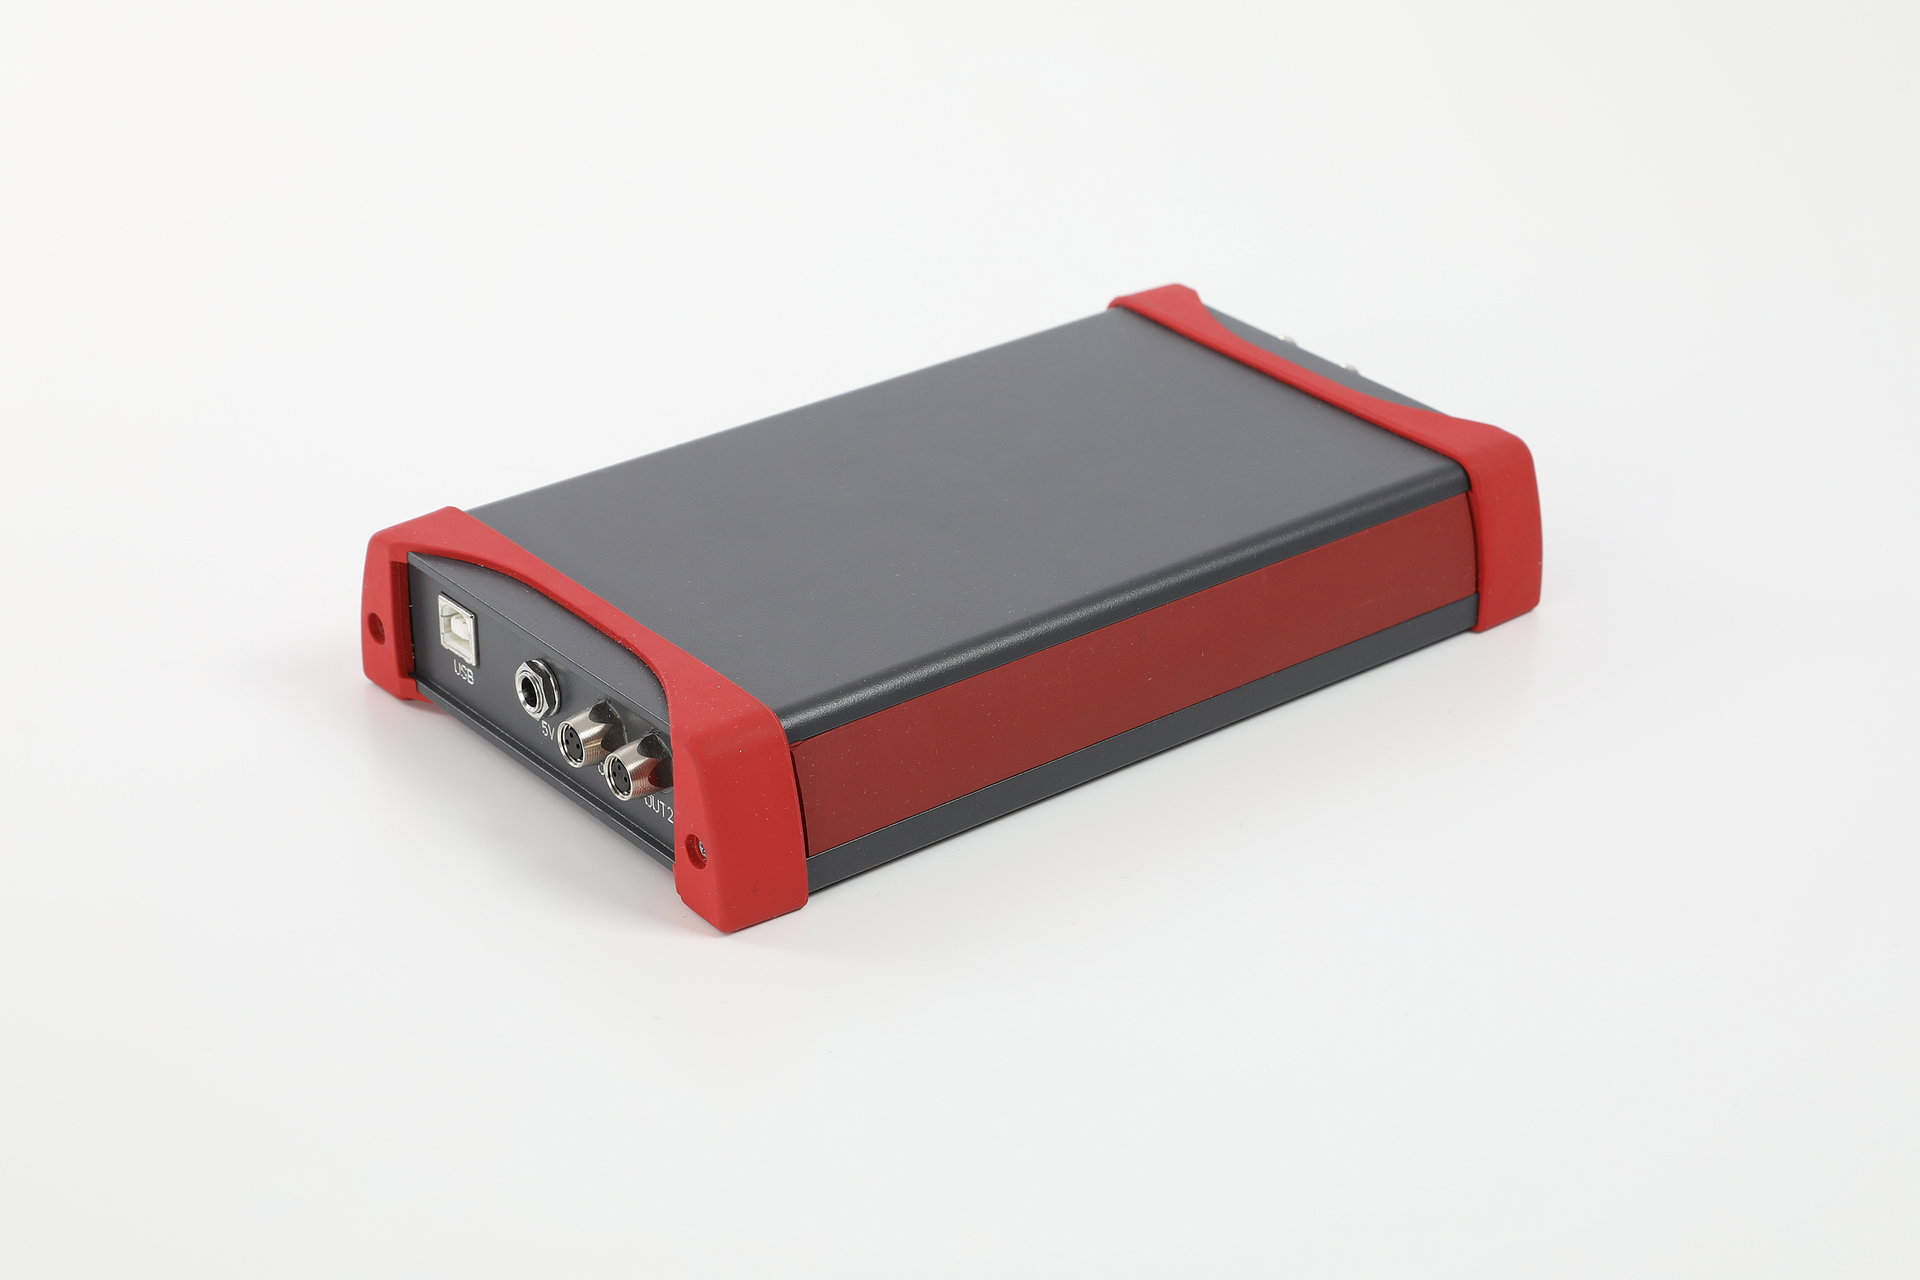 ARD RFID Blocker (Pack of 2) - NFC Jammer – Lab401